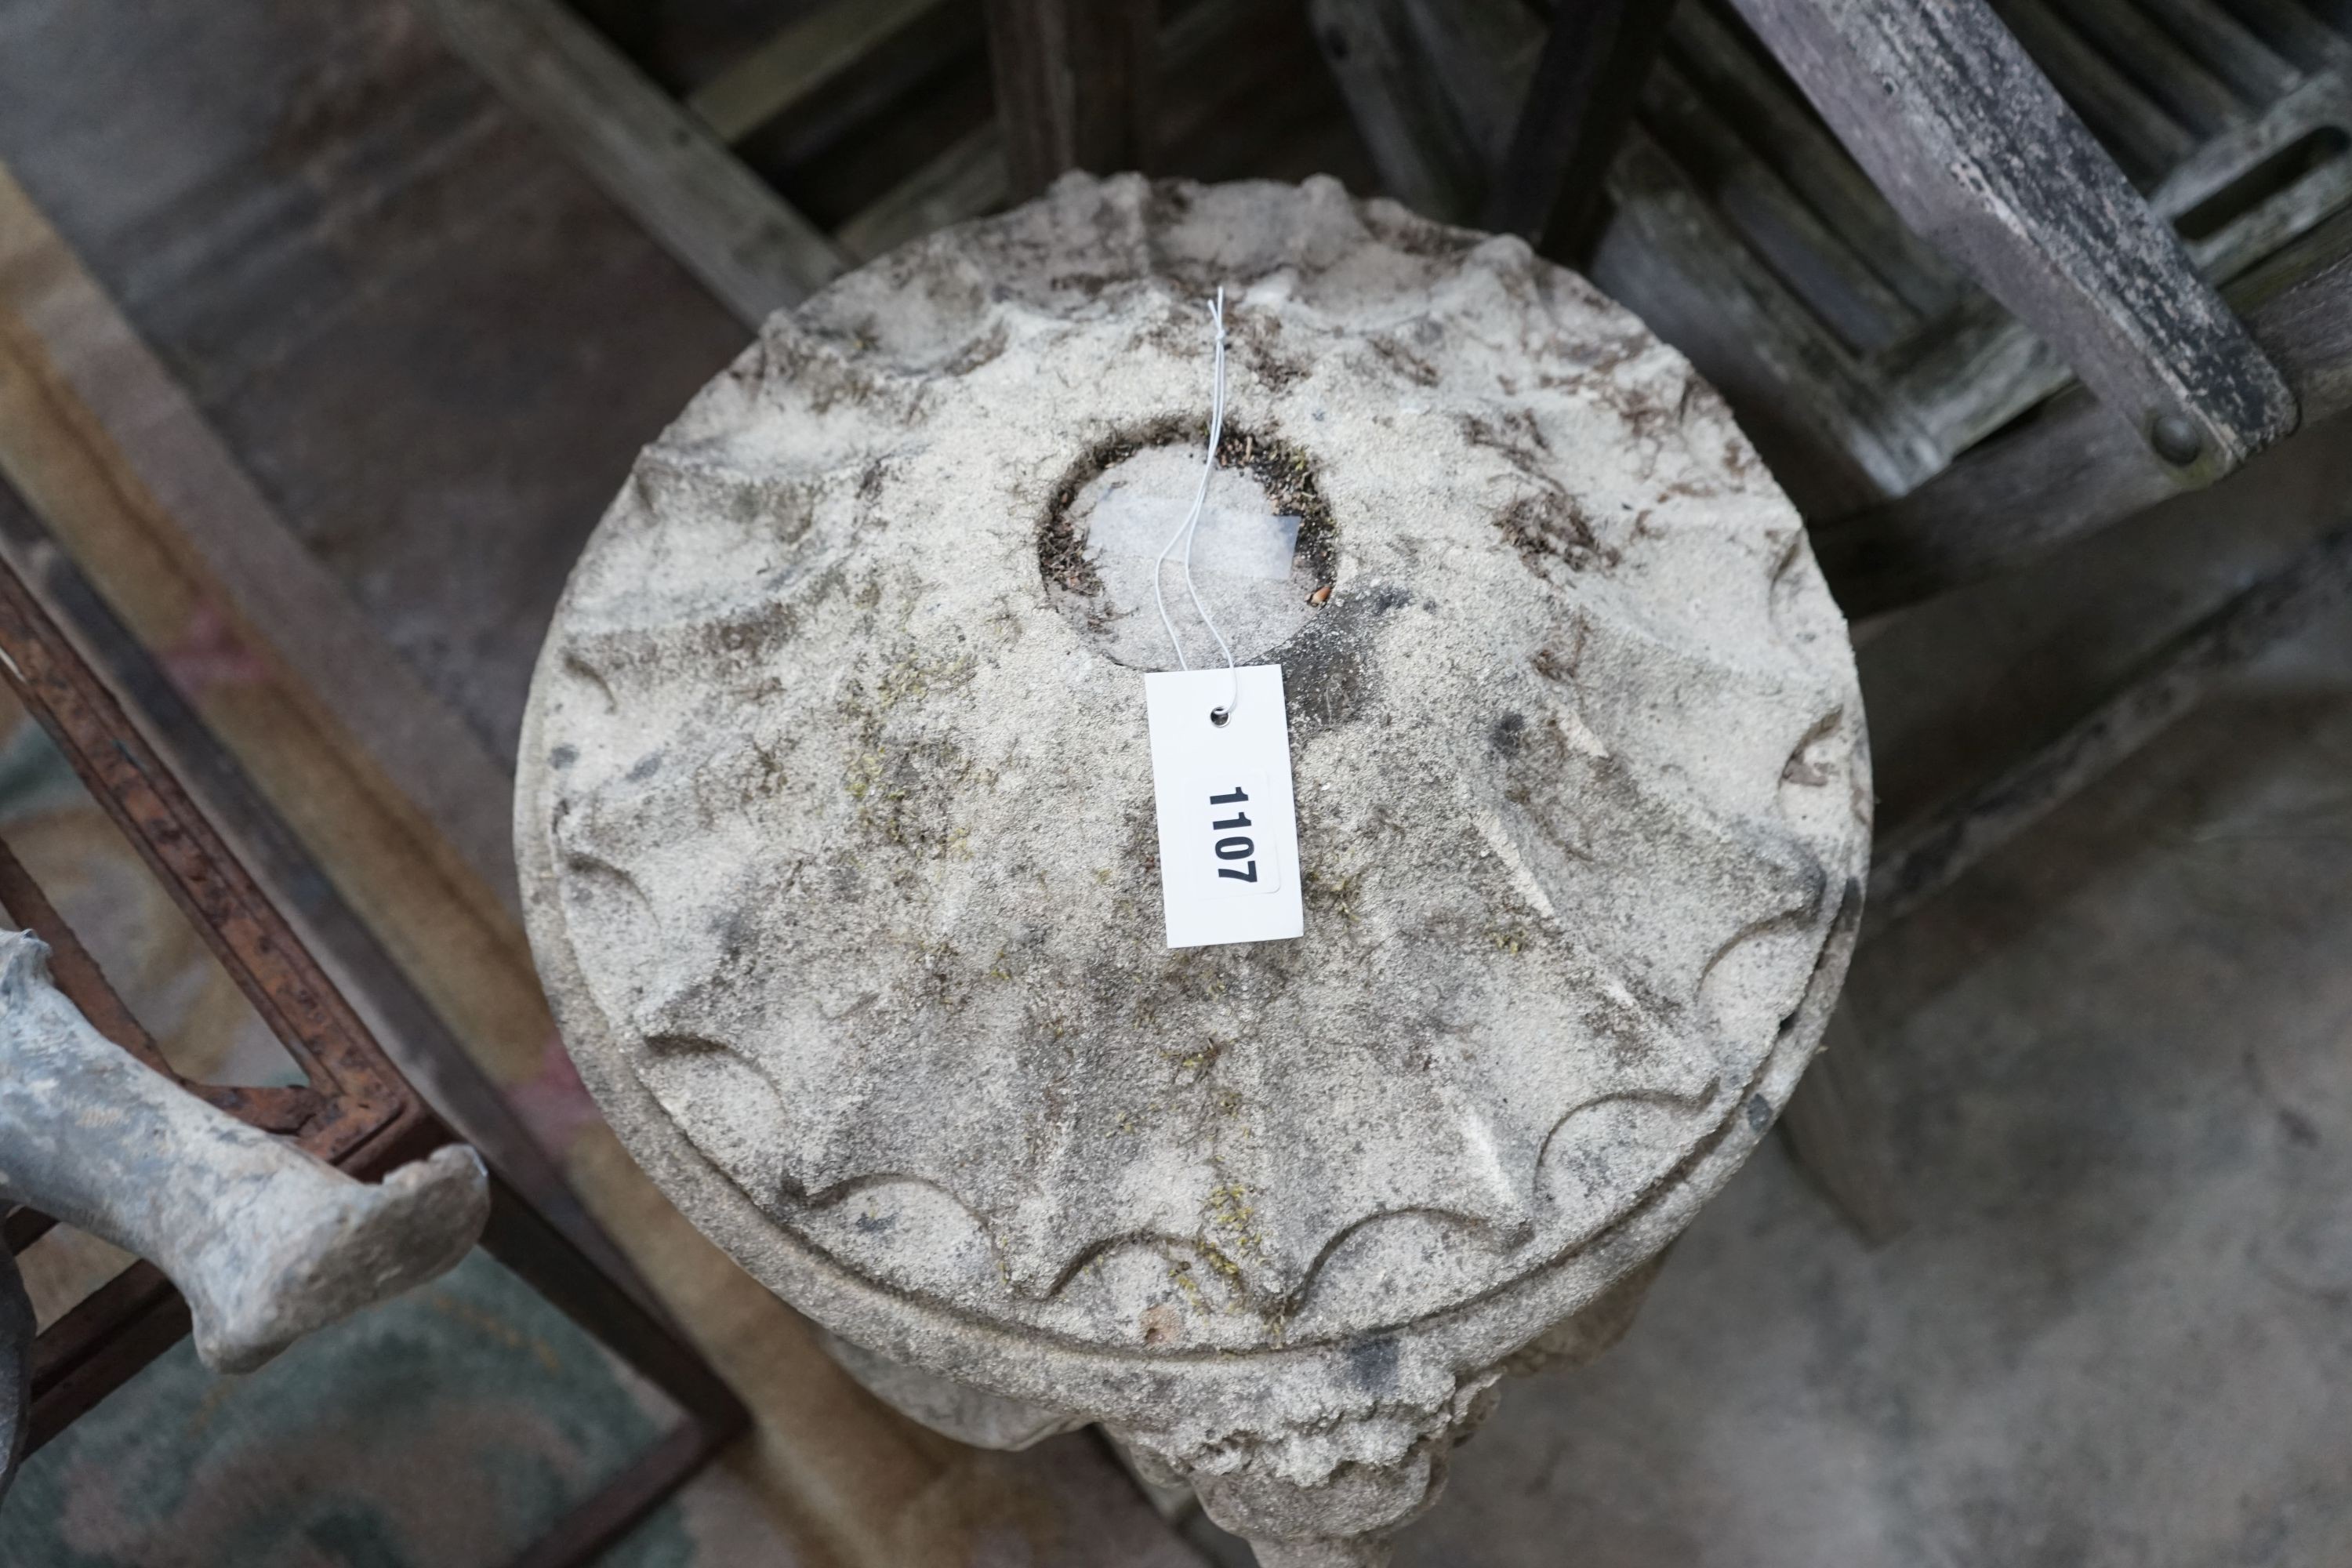 An Adam design reconstituted stone garden lidded urn with lion mask body, diameter 40cm, height 60cm